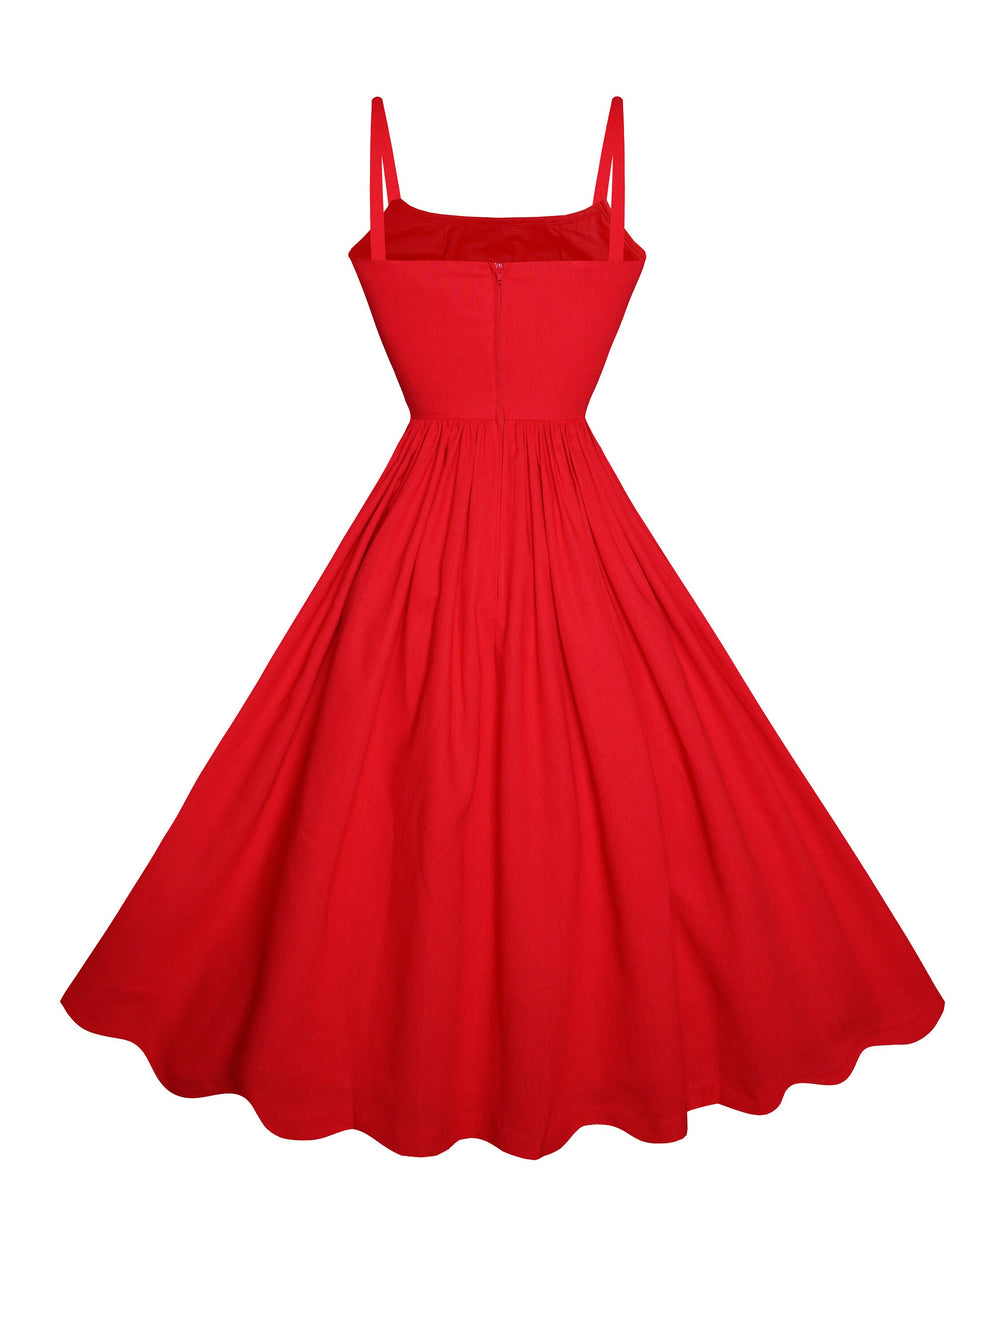 MTO - Grace Dress in Chili Red Linen